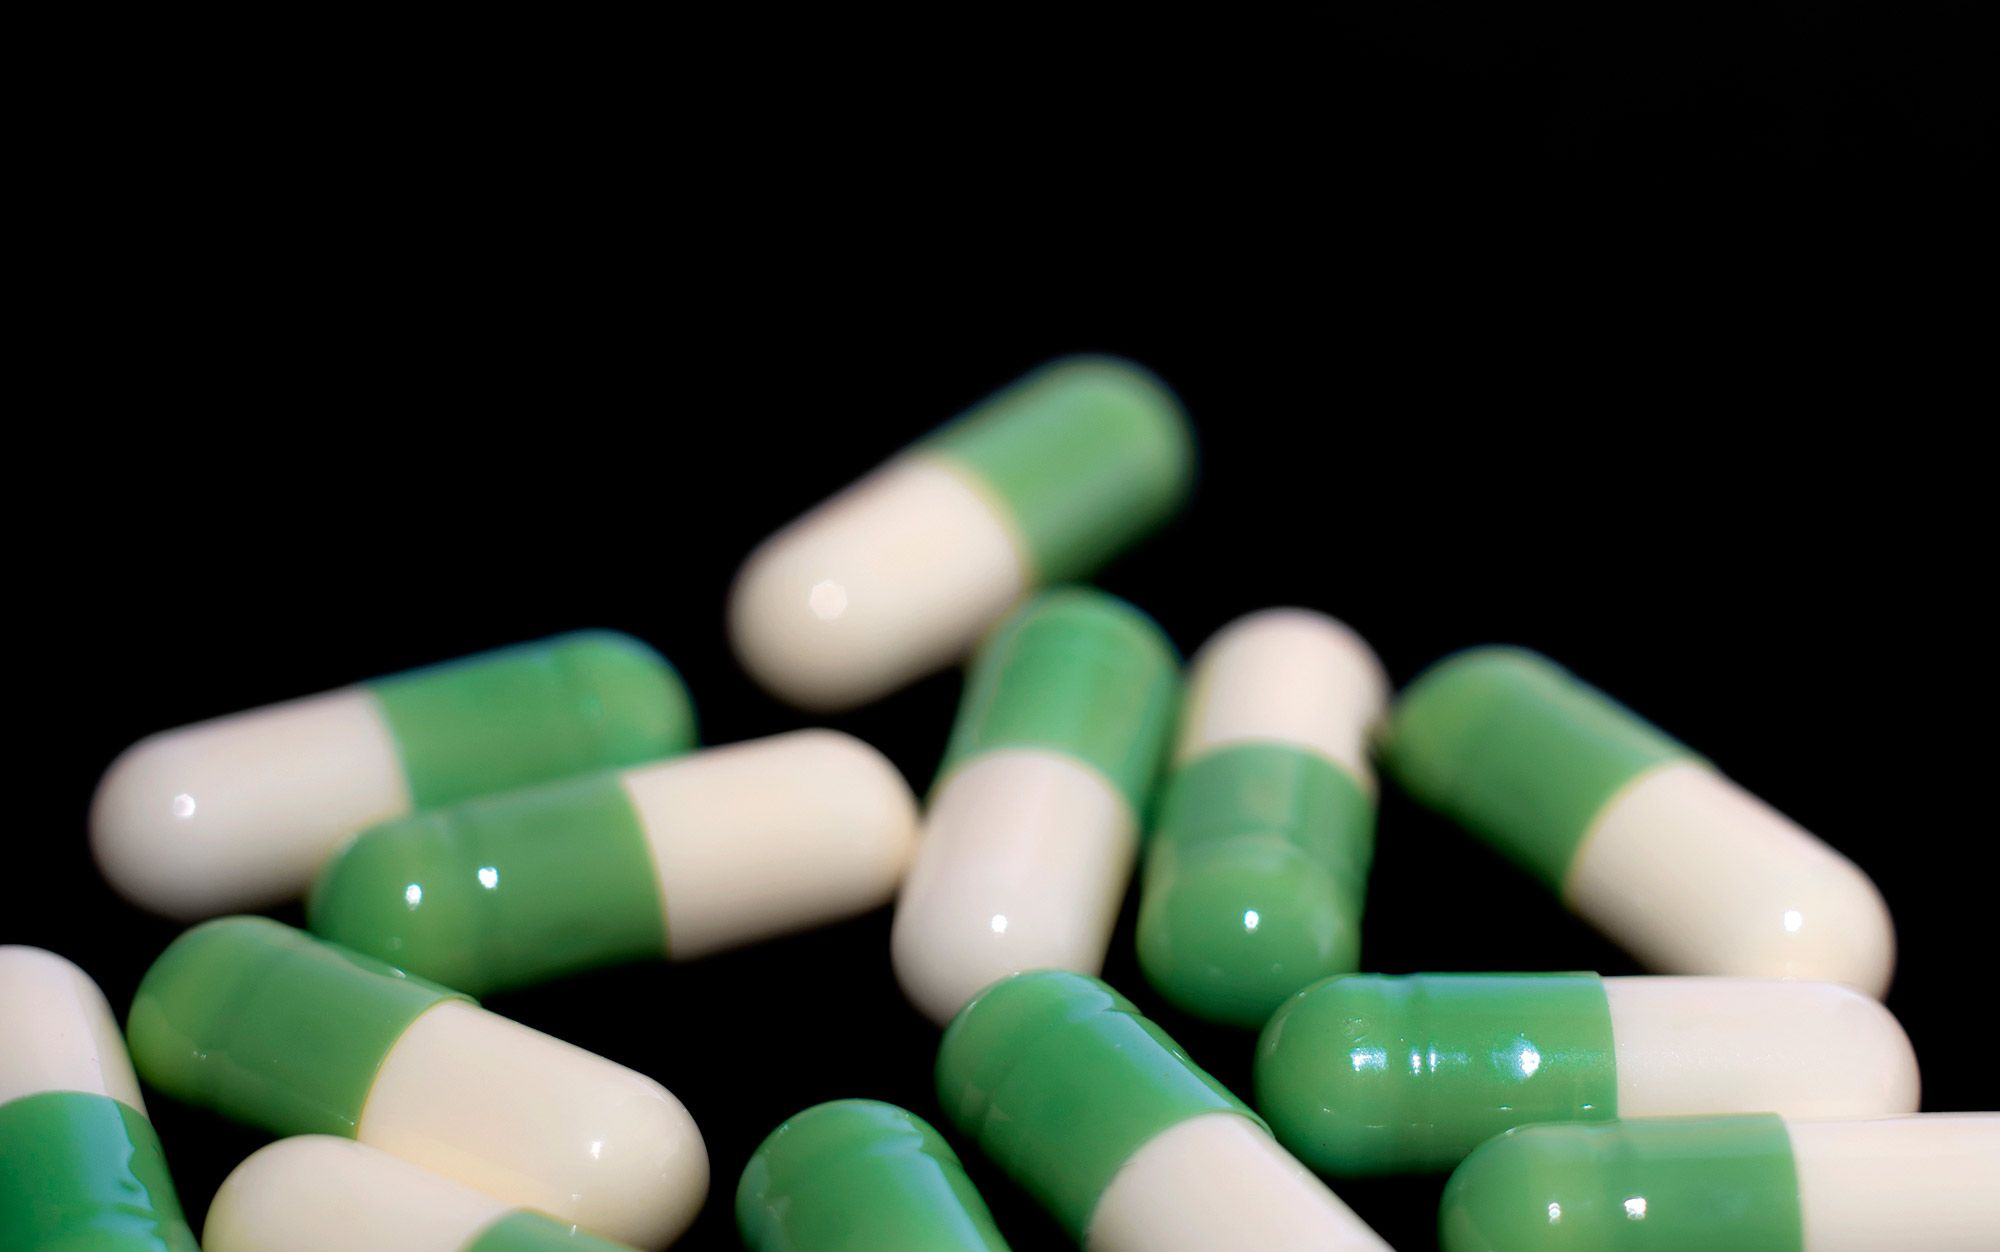 Do antidepressants work? | Aeon